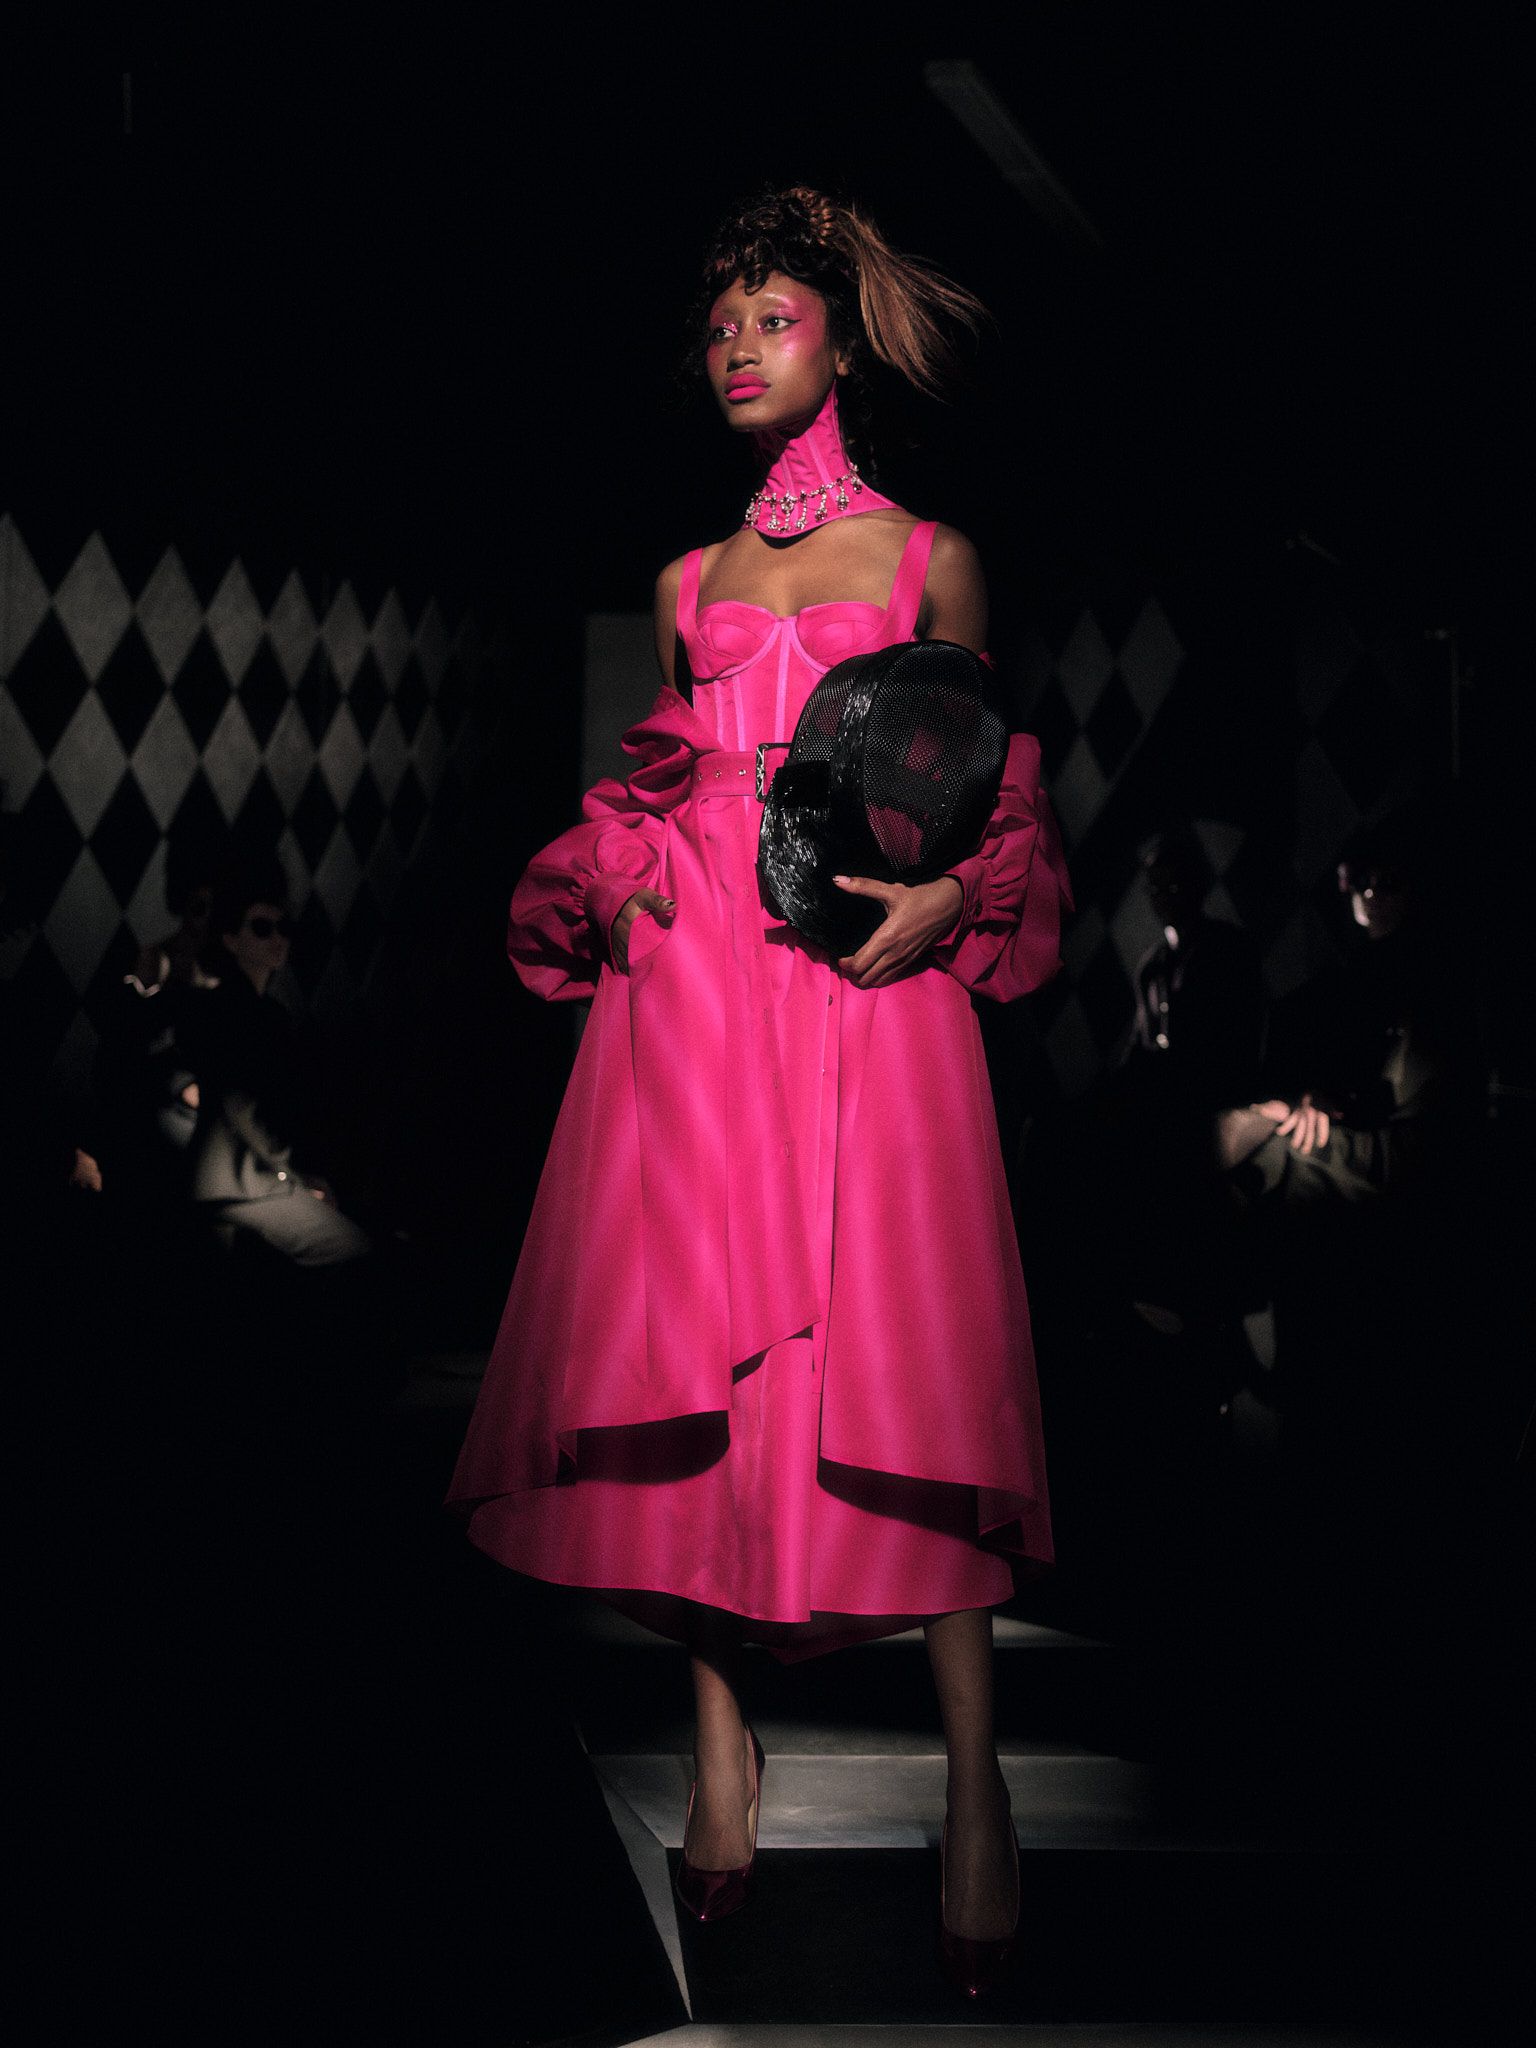 Blue High Fashion Design Poster Print of Louis Vuitton, Prada - Black  Woman, African American Women Gifts - Couture Designer Glam Wall Decor -  Latina